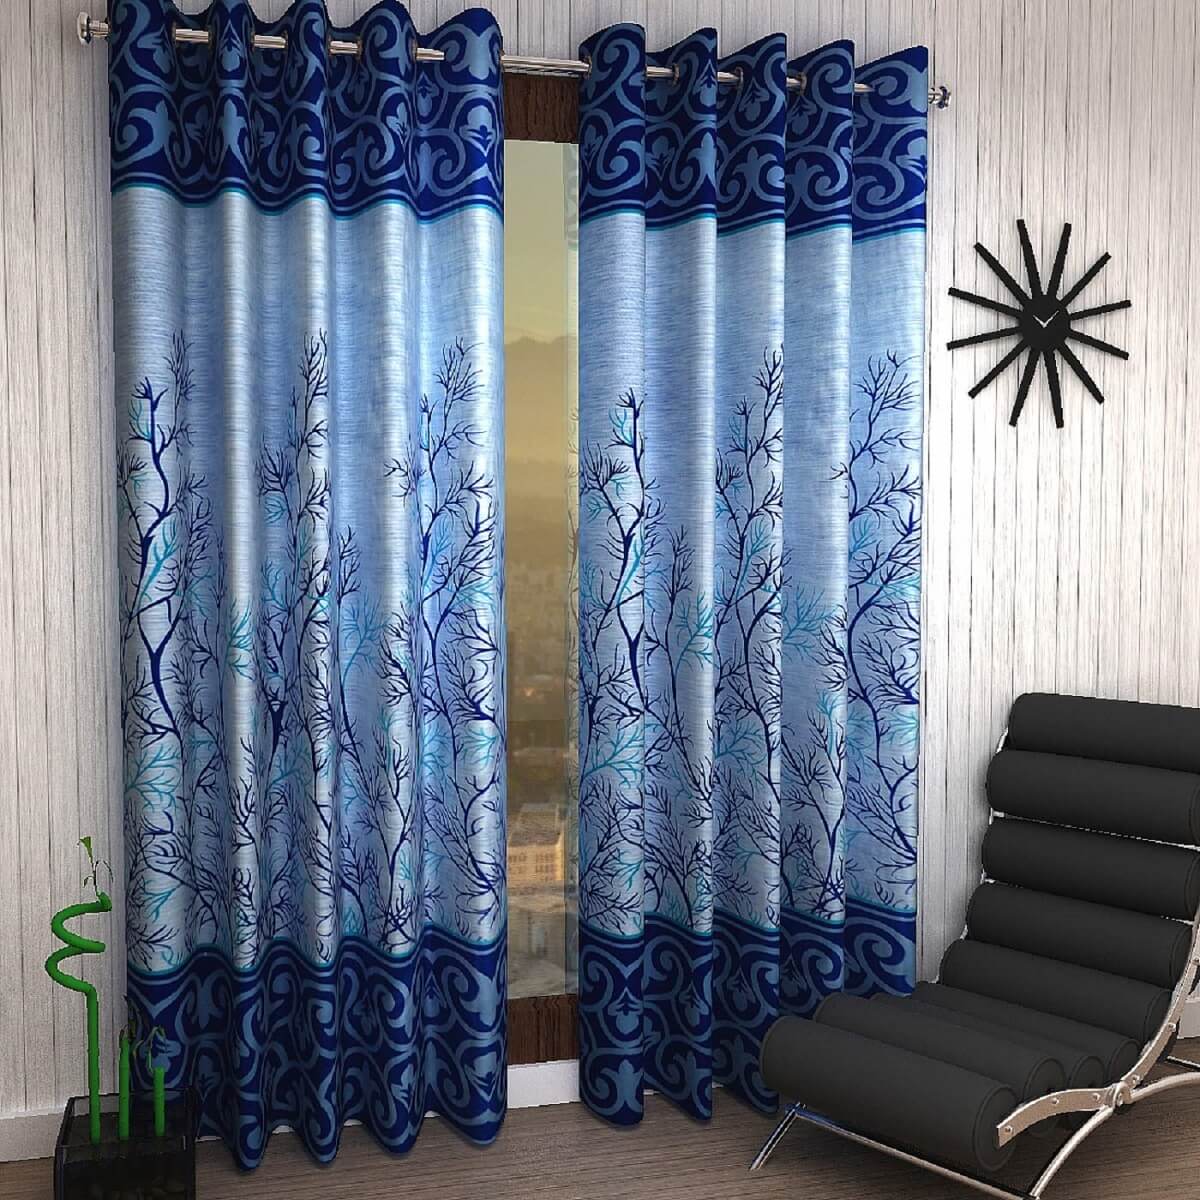 Window Curtain Designs in Sri Lanka